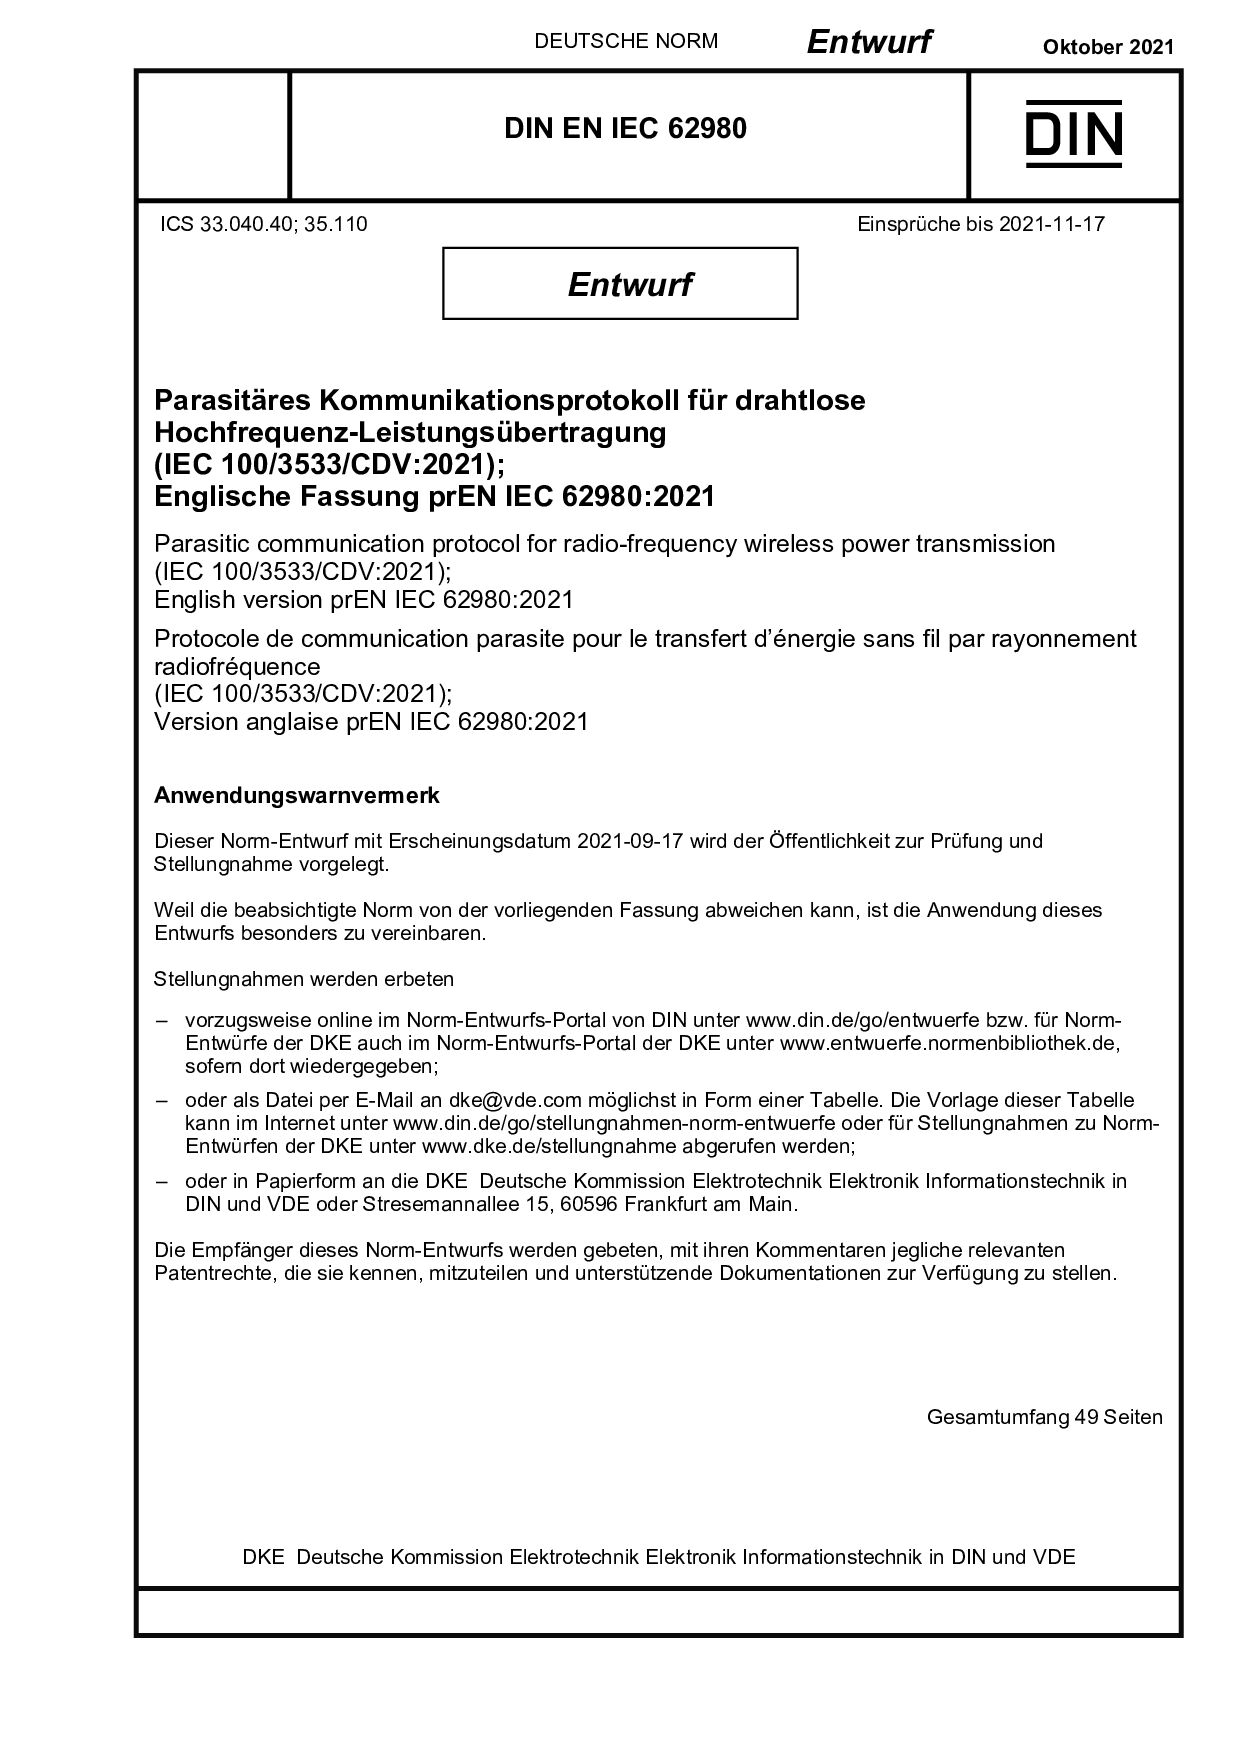 DIN EN IEC 62980 E:2021-10封面图